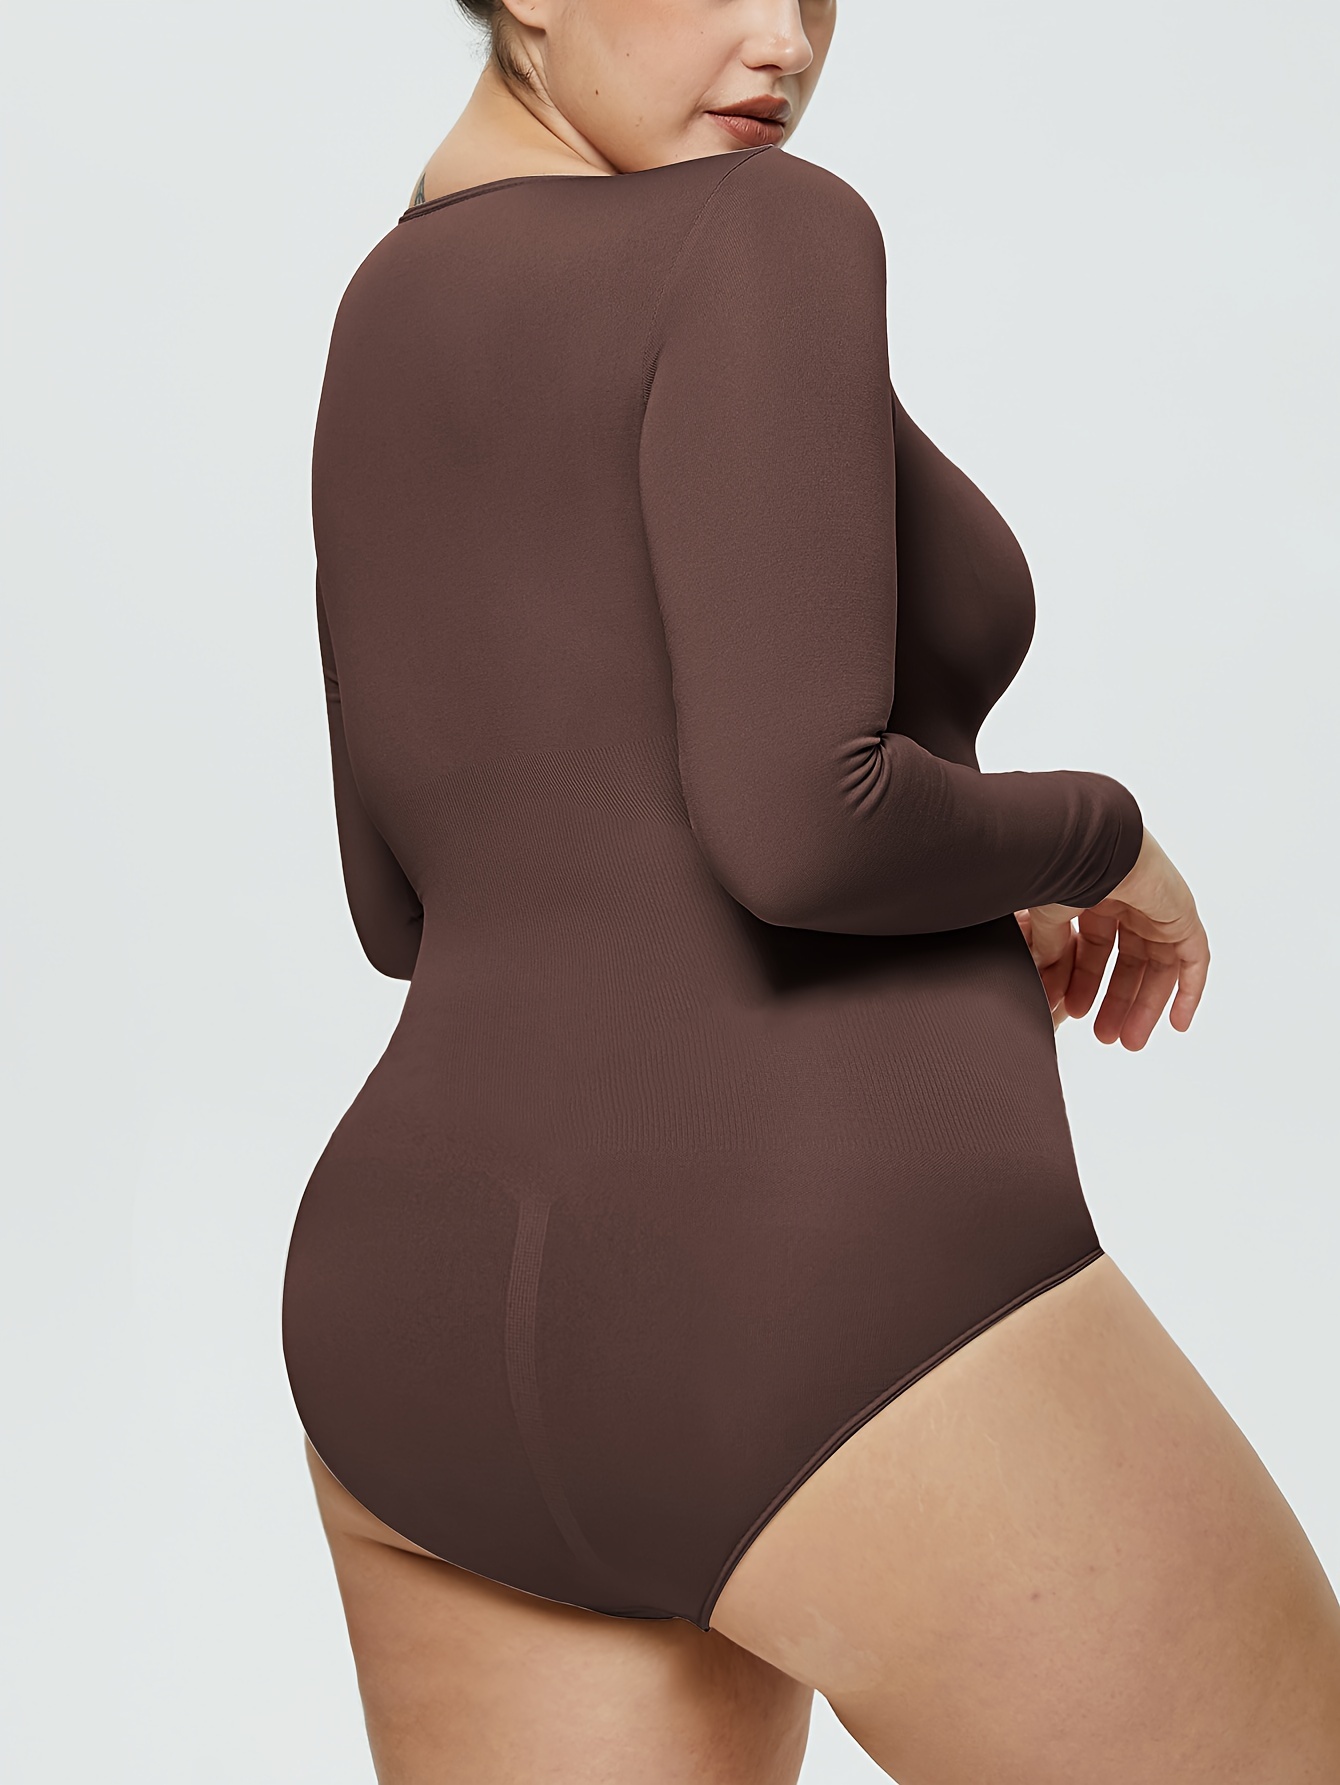 Women's Simple Shapewear Bodysuit, Plus Size Solid Seamless Long Sleeve  Tummy Control Slimming Body Shaper